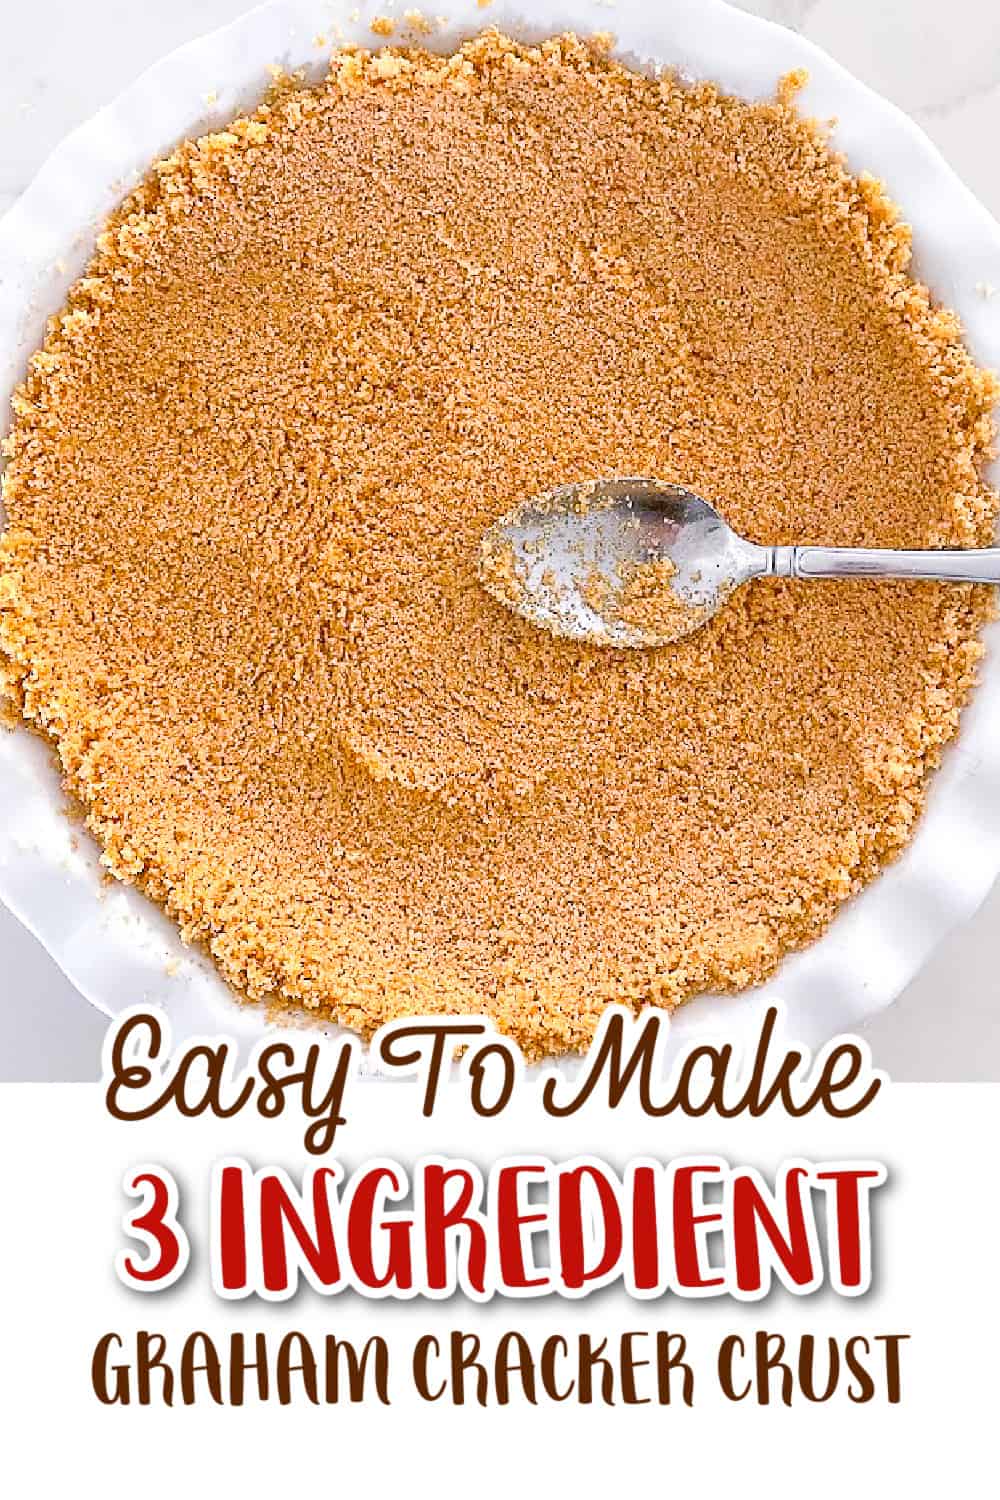 how to make easy 3 ingredient homemade graham cracker crust pie recipe